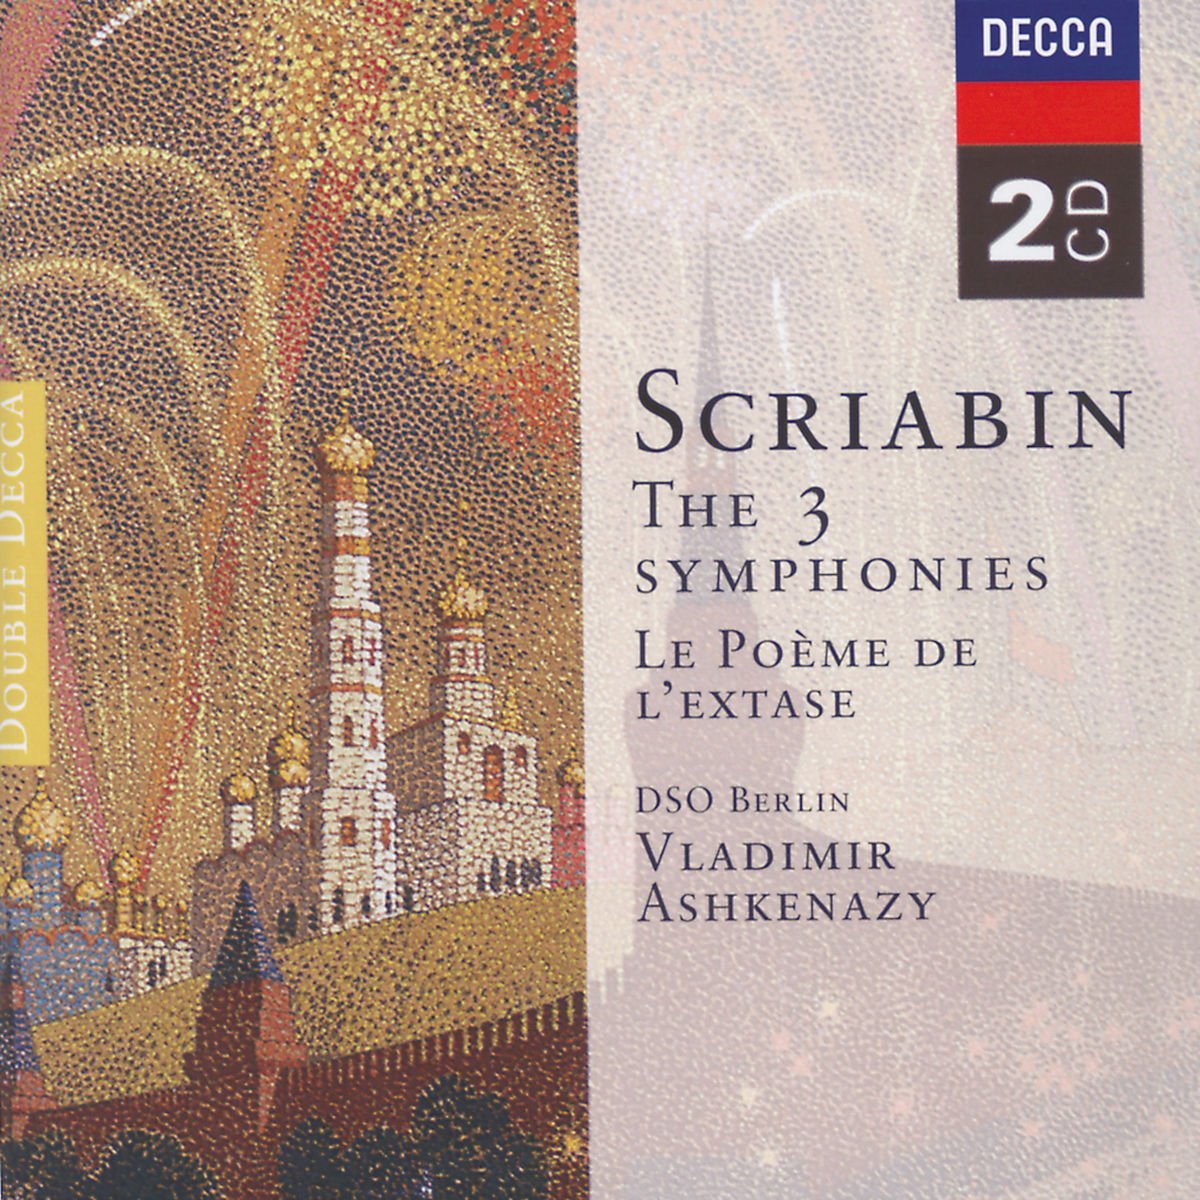 The 3 Symphonies | Vladimir Ashkenazy, Alexander Scriabin